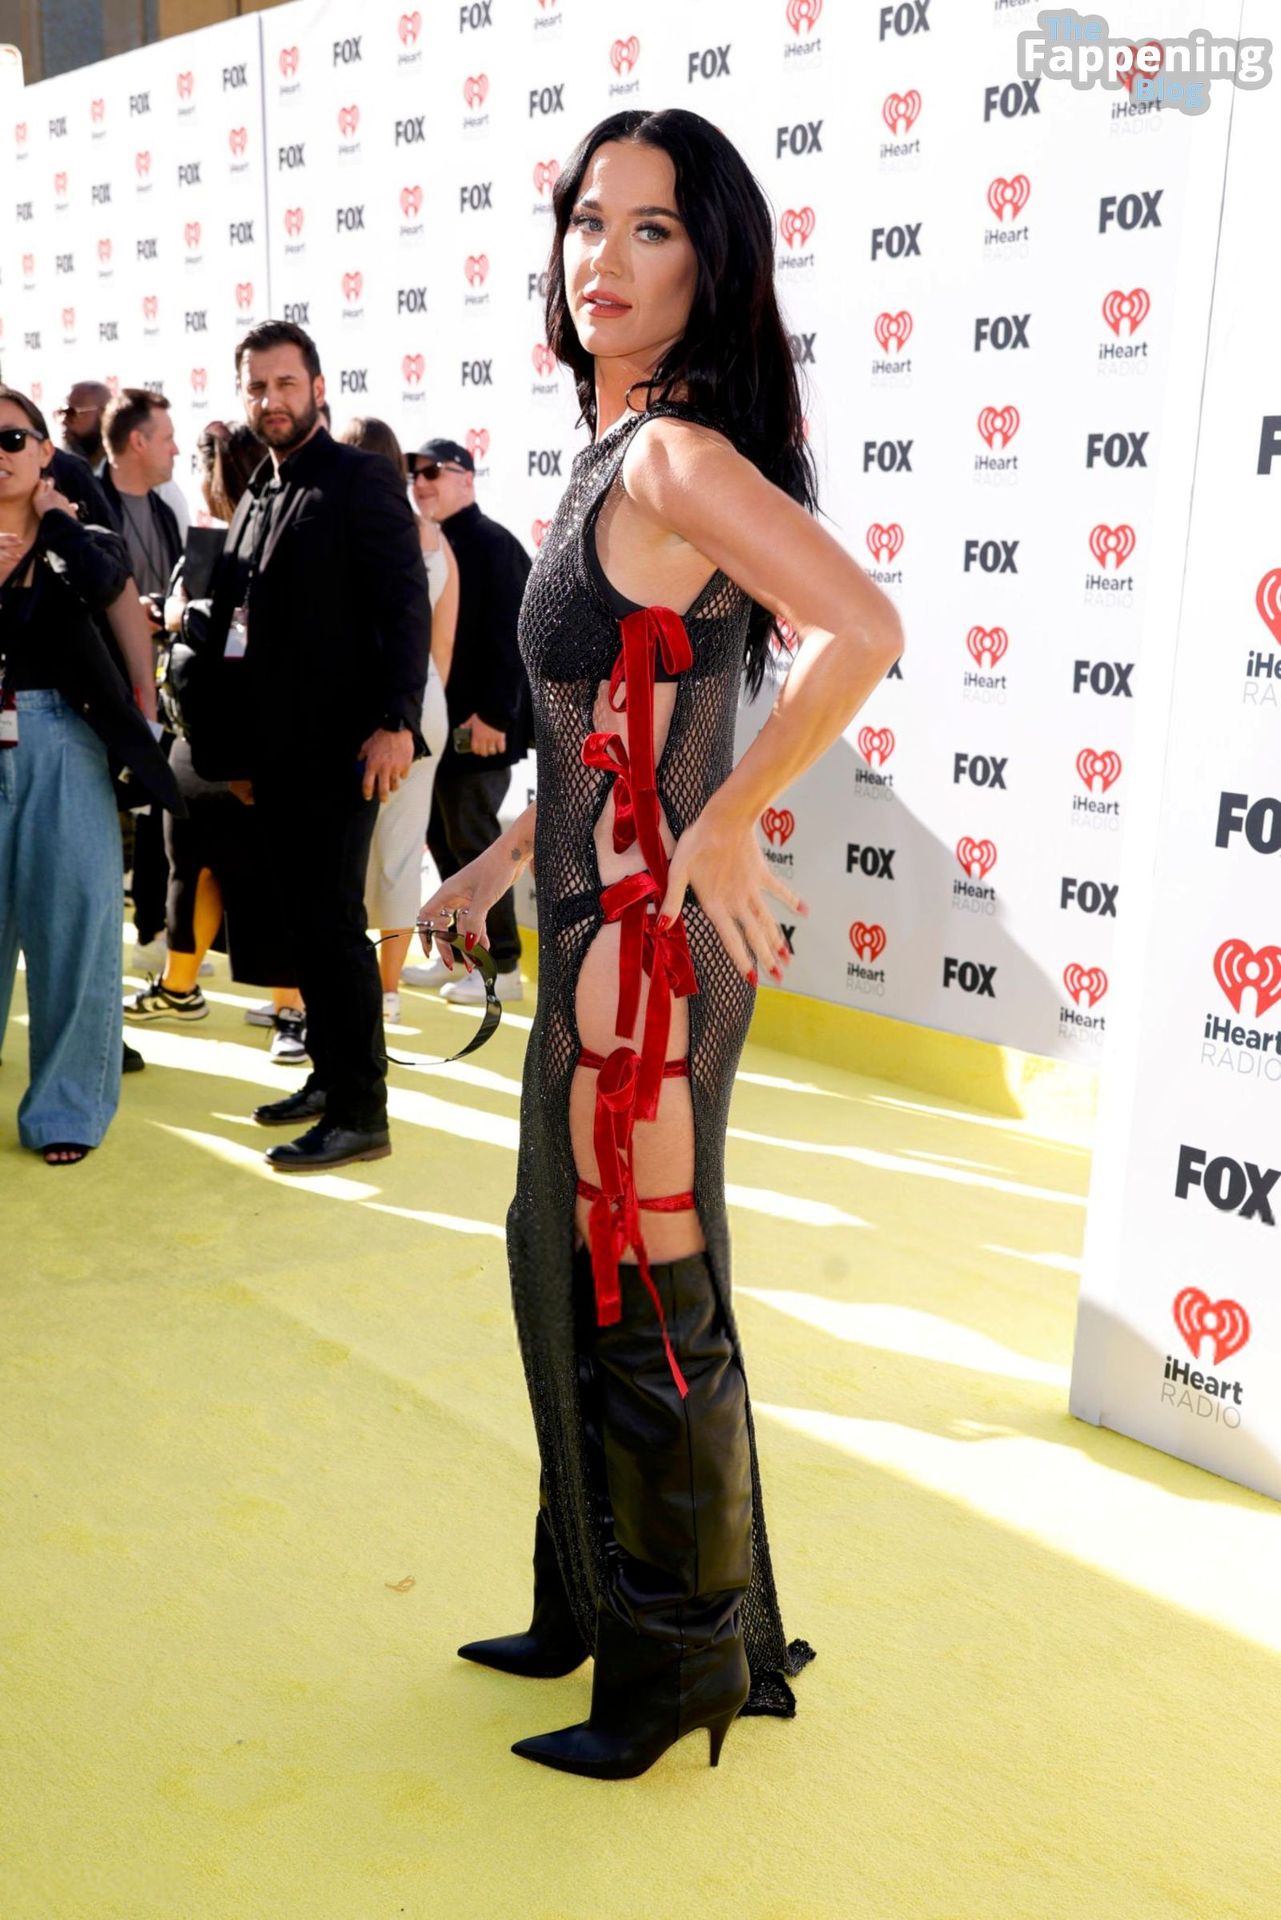 Katy-Perry-Revealing-Attire-iHeartRadio-Music-Awards-8-thefappeningblog.com_.jpg